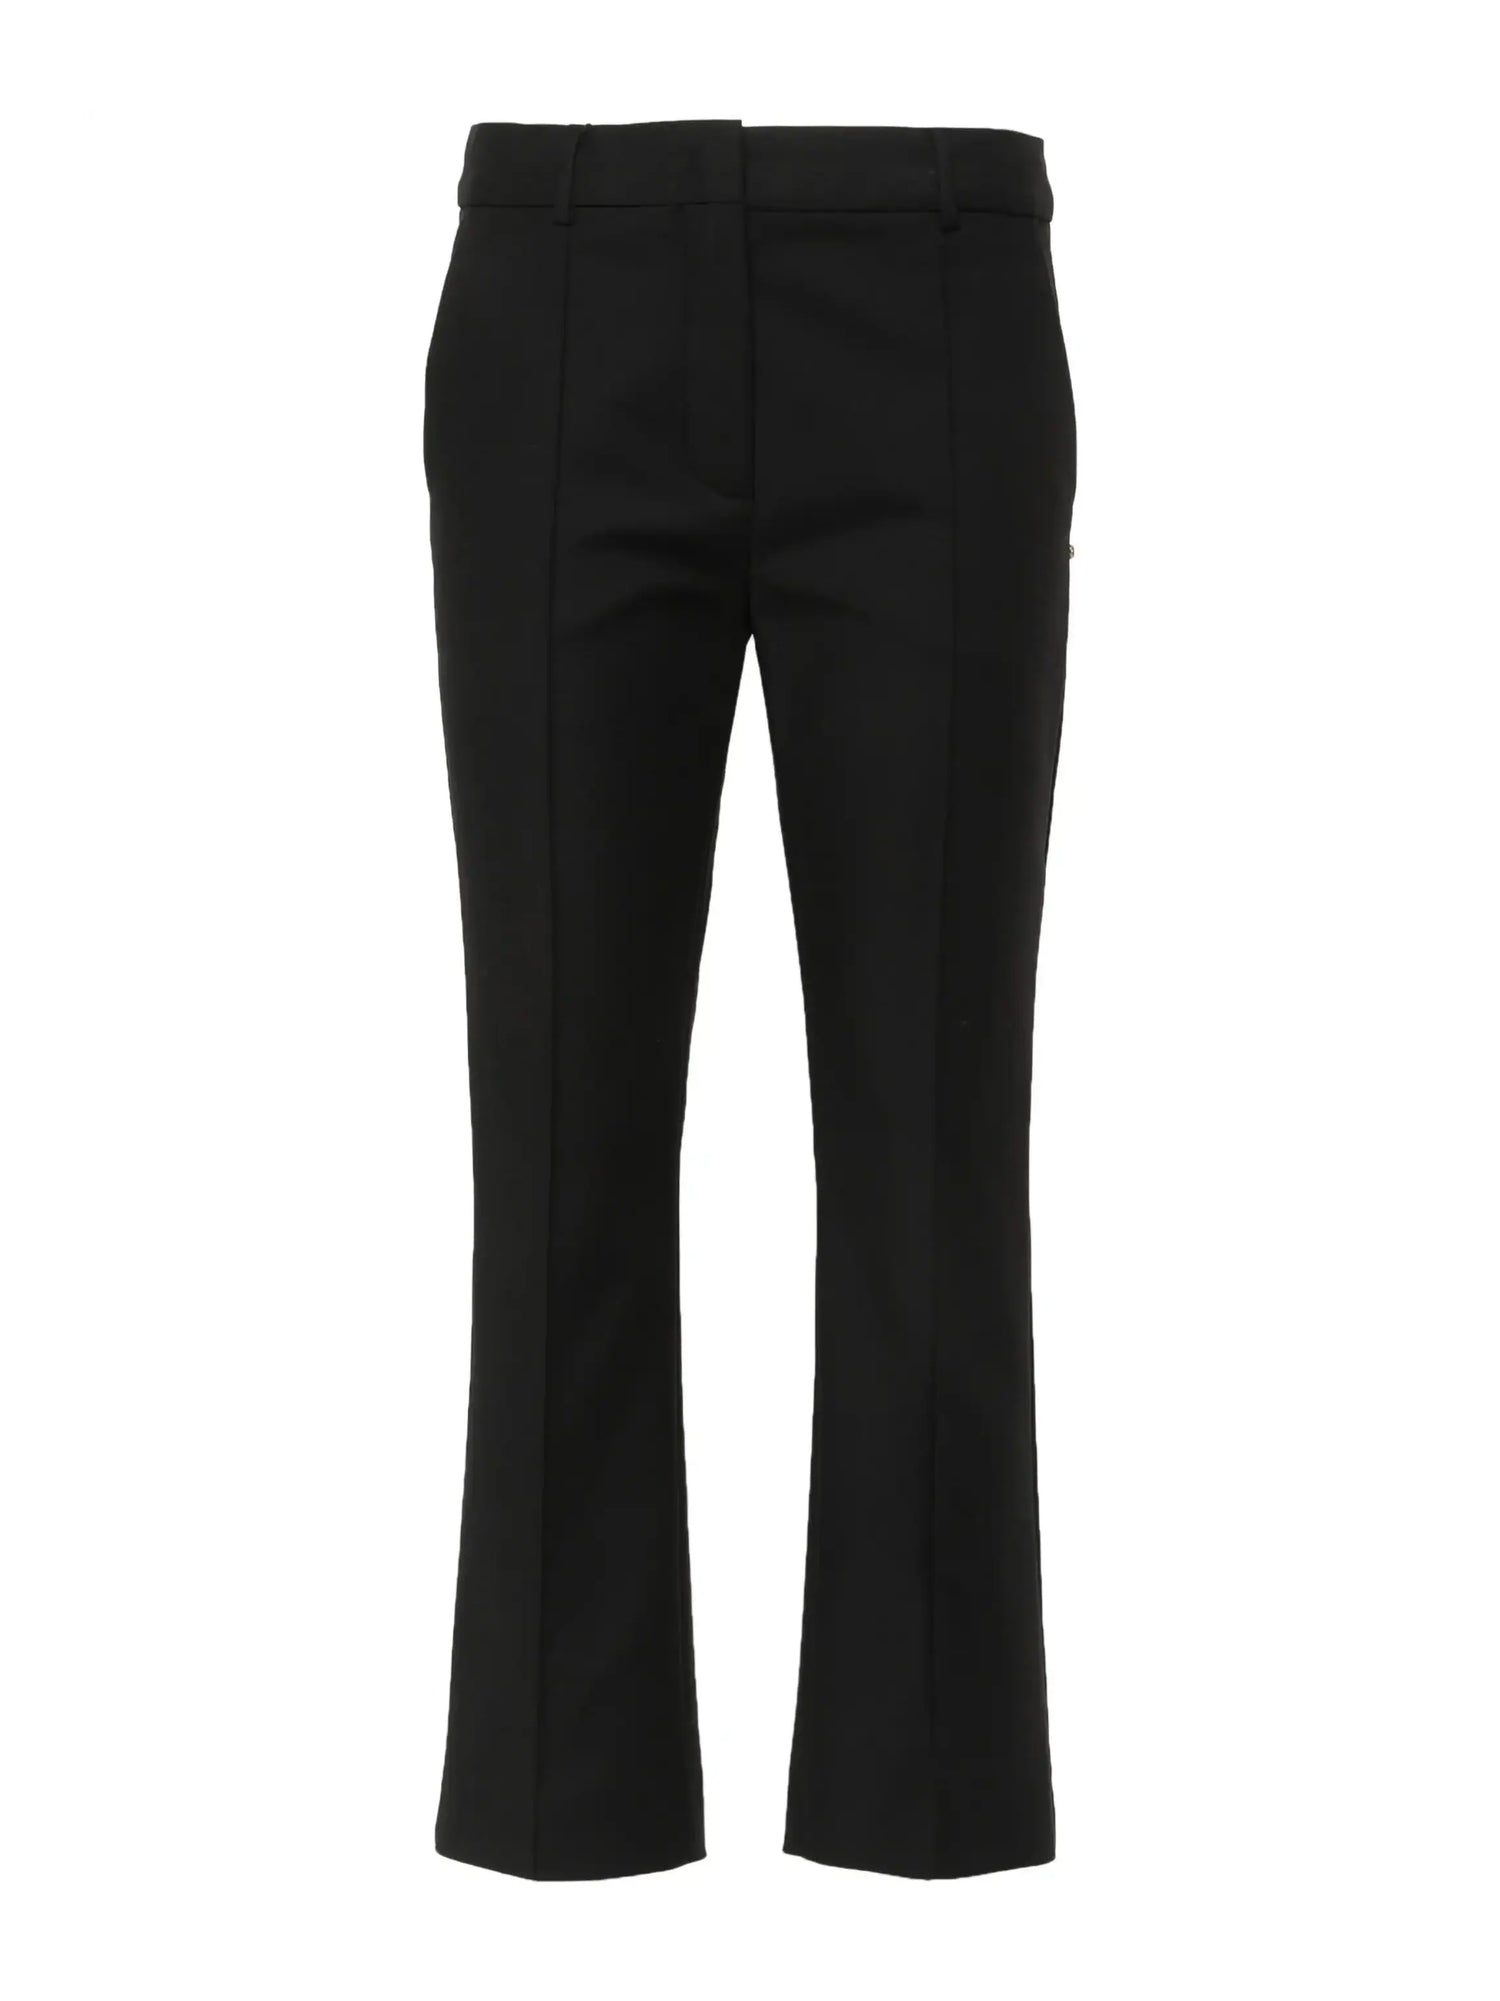 ASIAGO Stretch cotton trousers, black